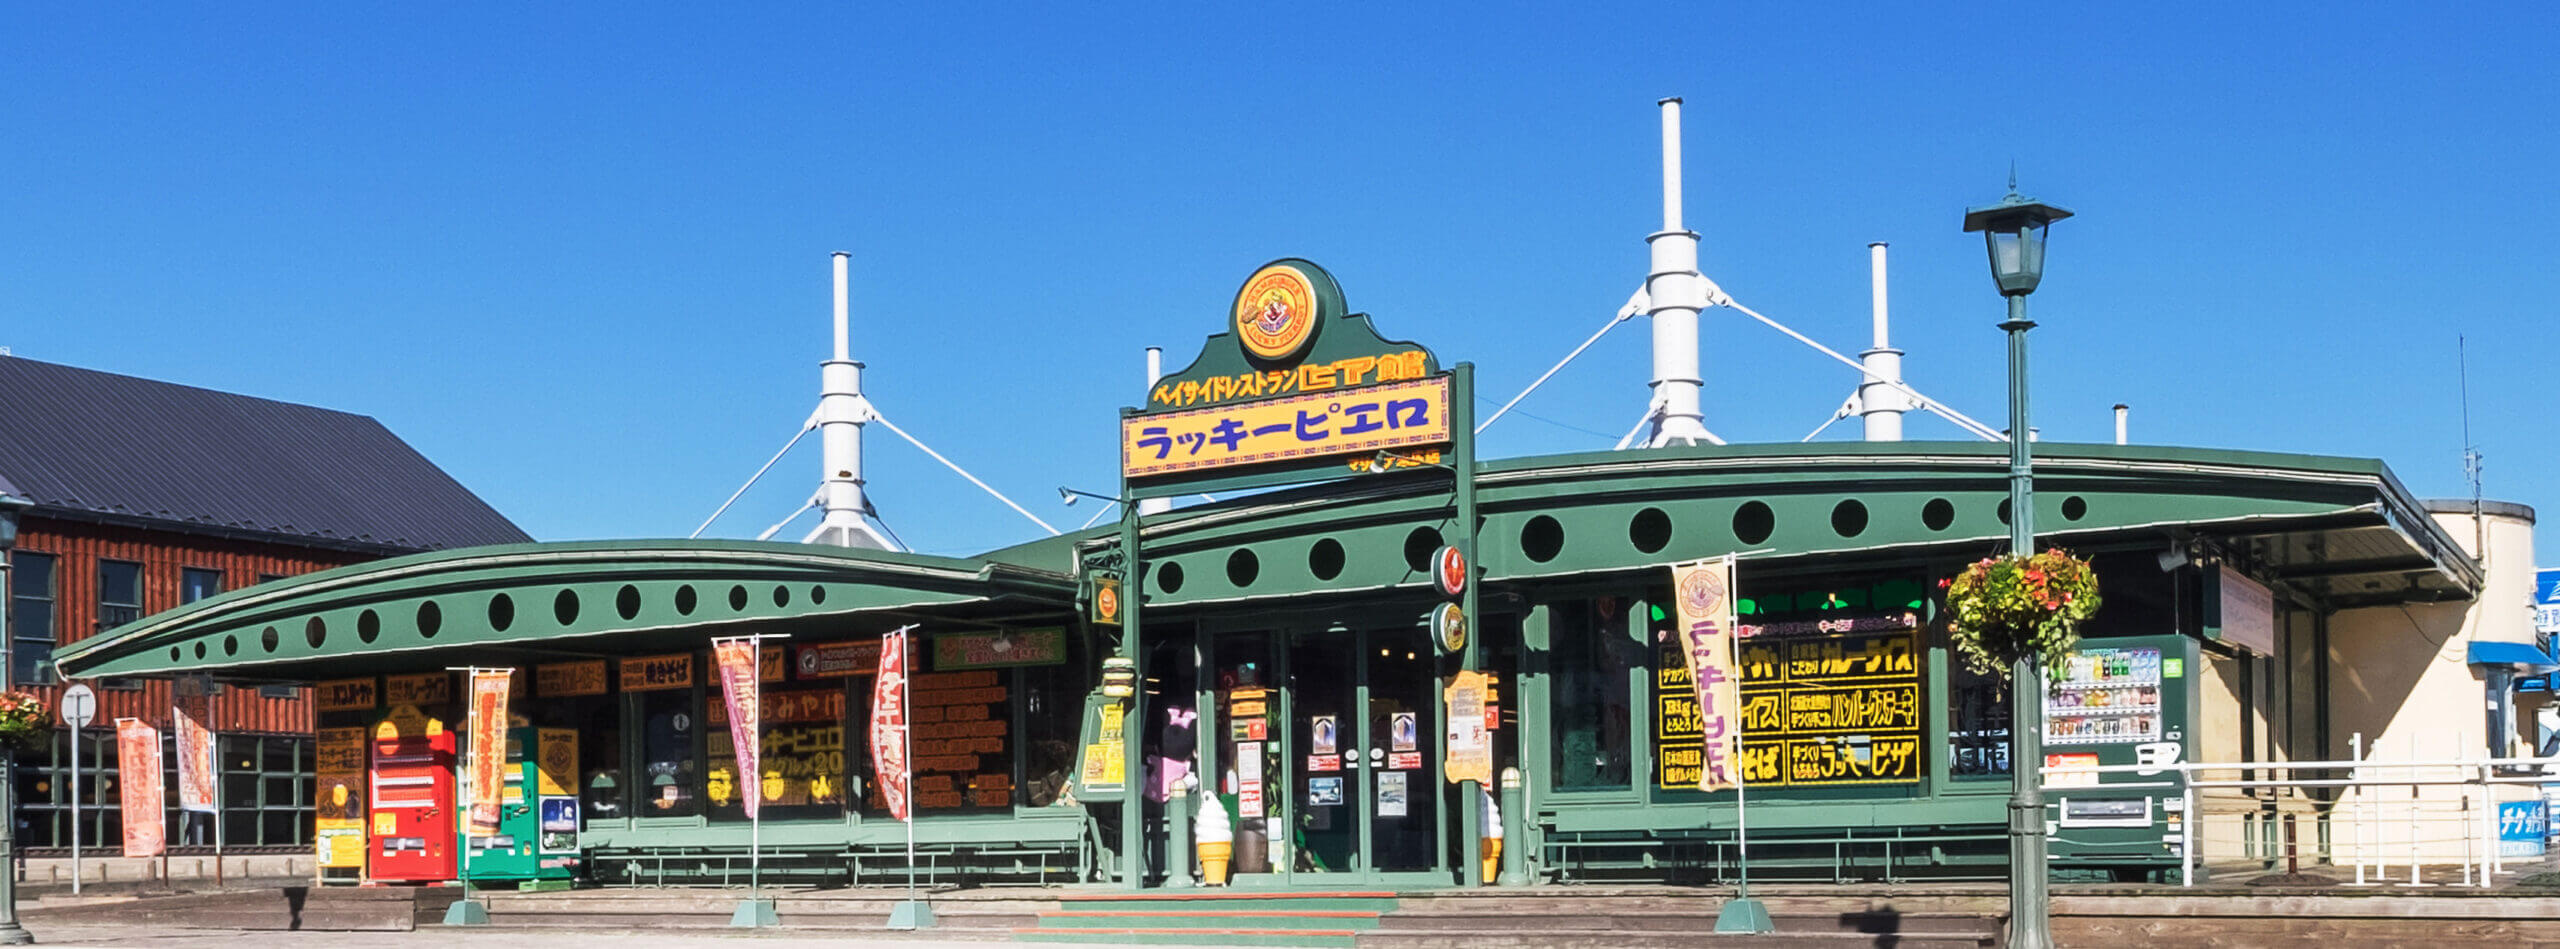 Lucky Pierrot: Hakodate’s Unique Burger Chain